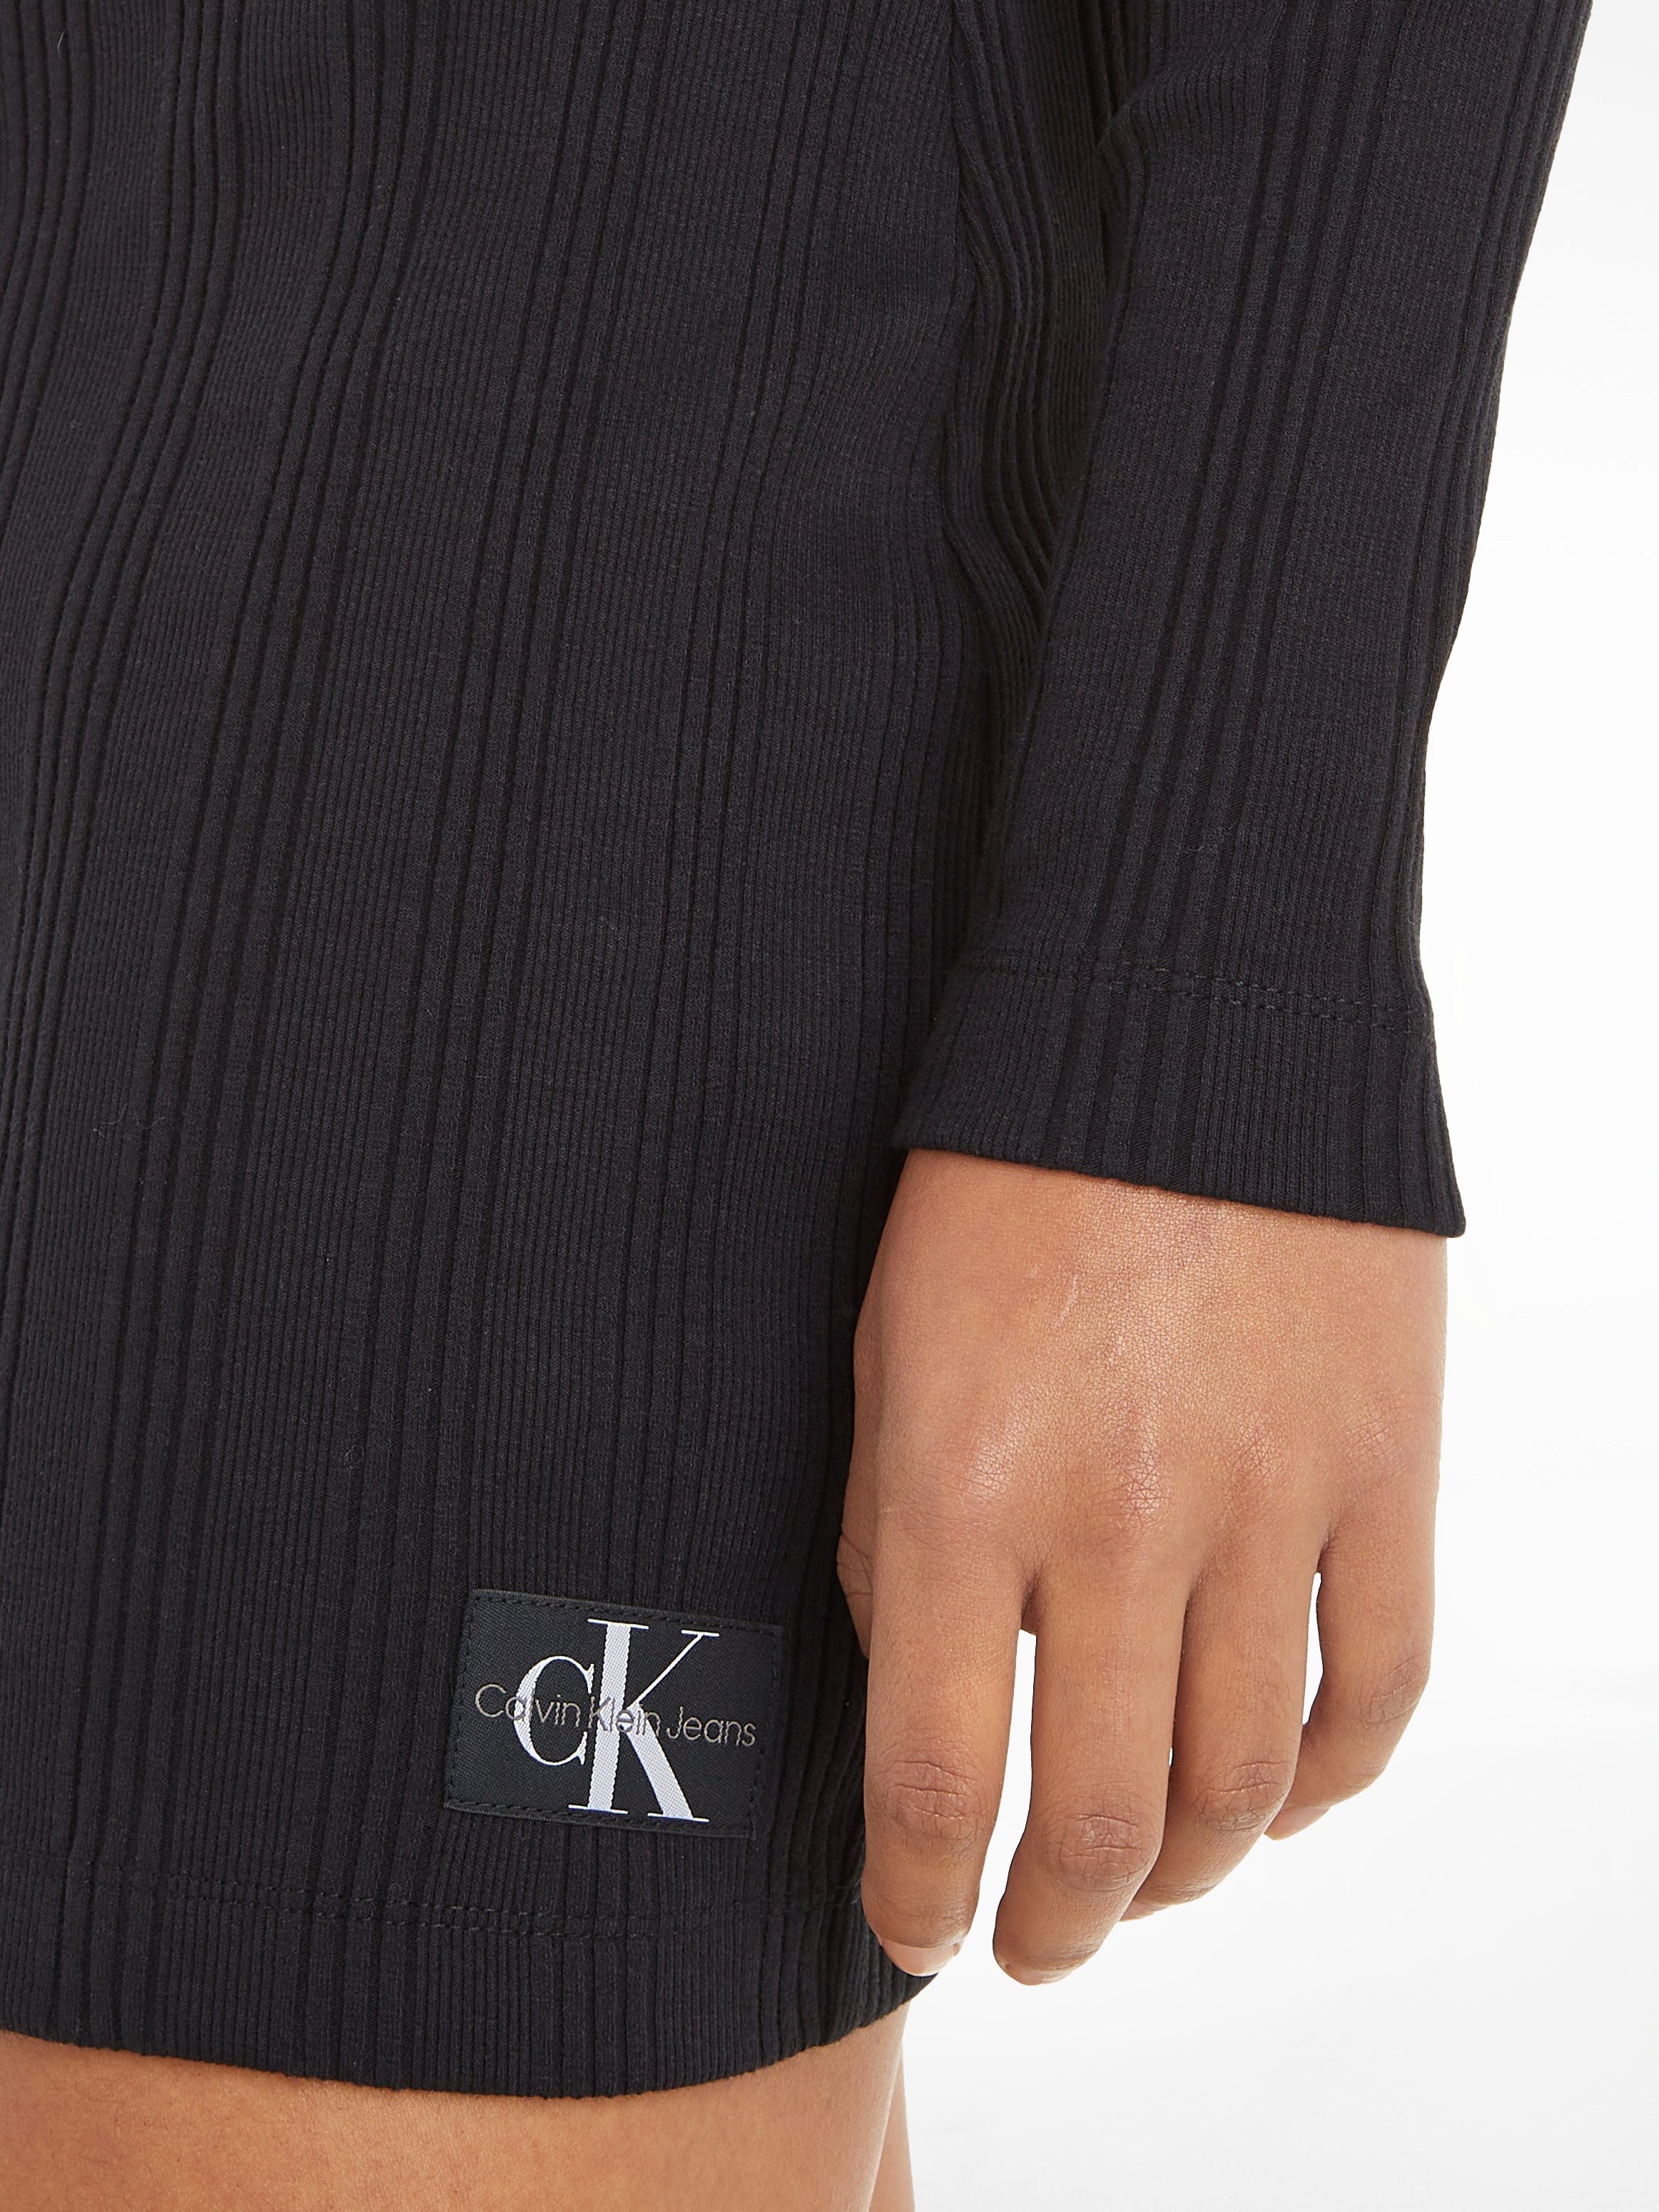 Calvin Klein RIB ELONGATED SHIRT Jeans Shirtkleid DRESS BADGE